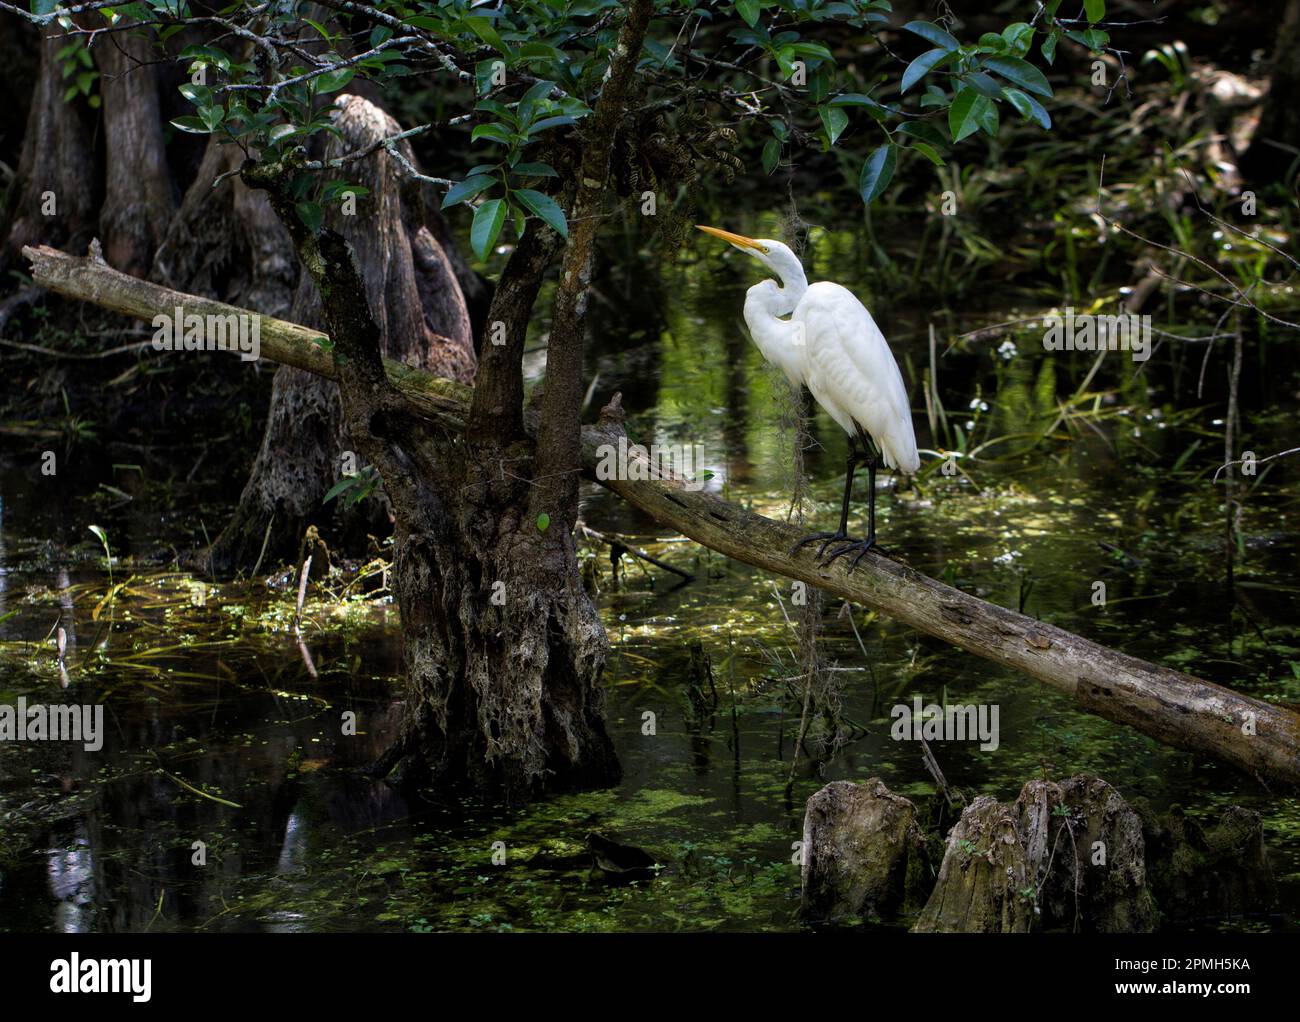 White Egret apoears luminous against the shadowy background of Big Cypress Swamp. Stock Photo